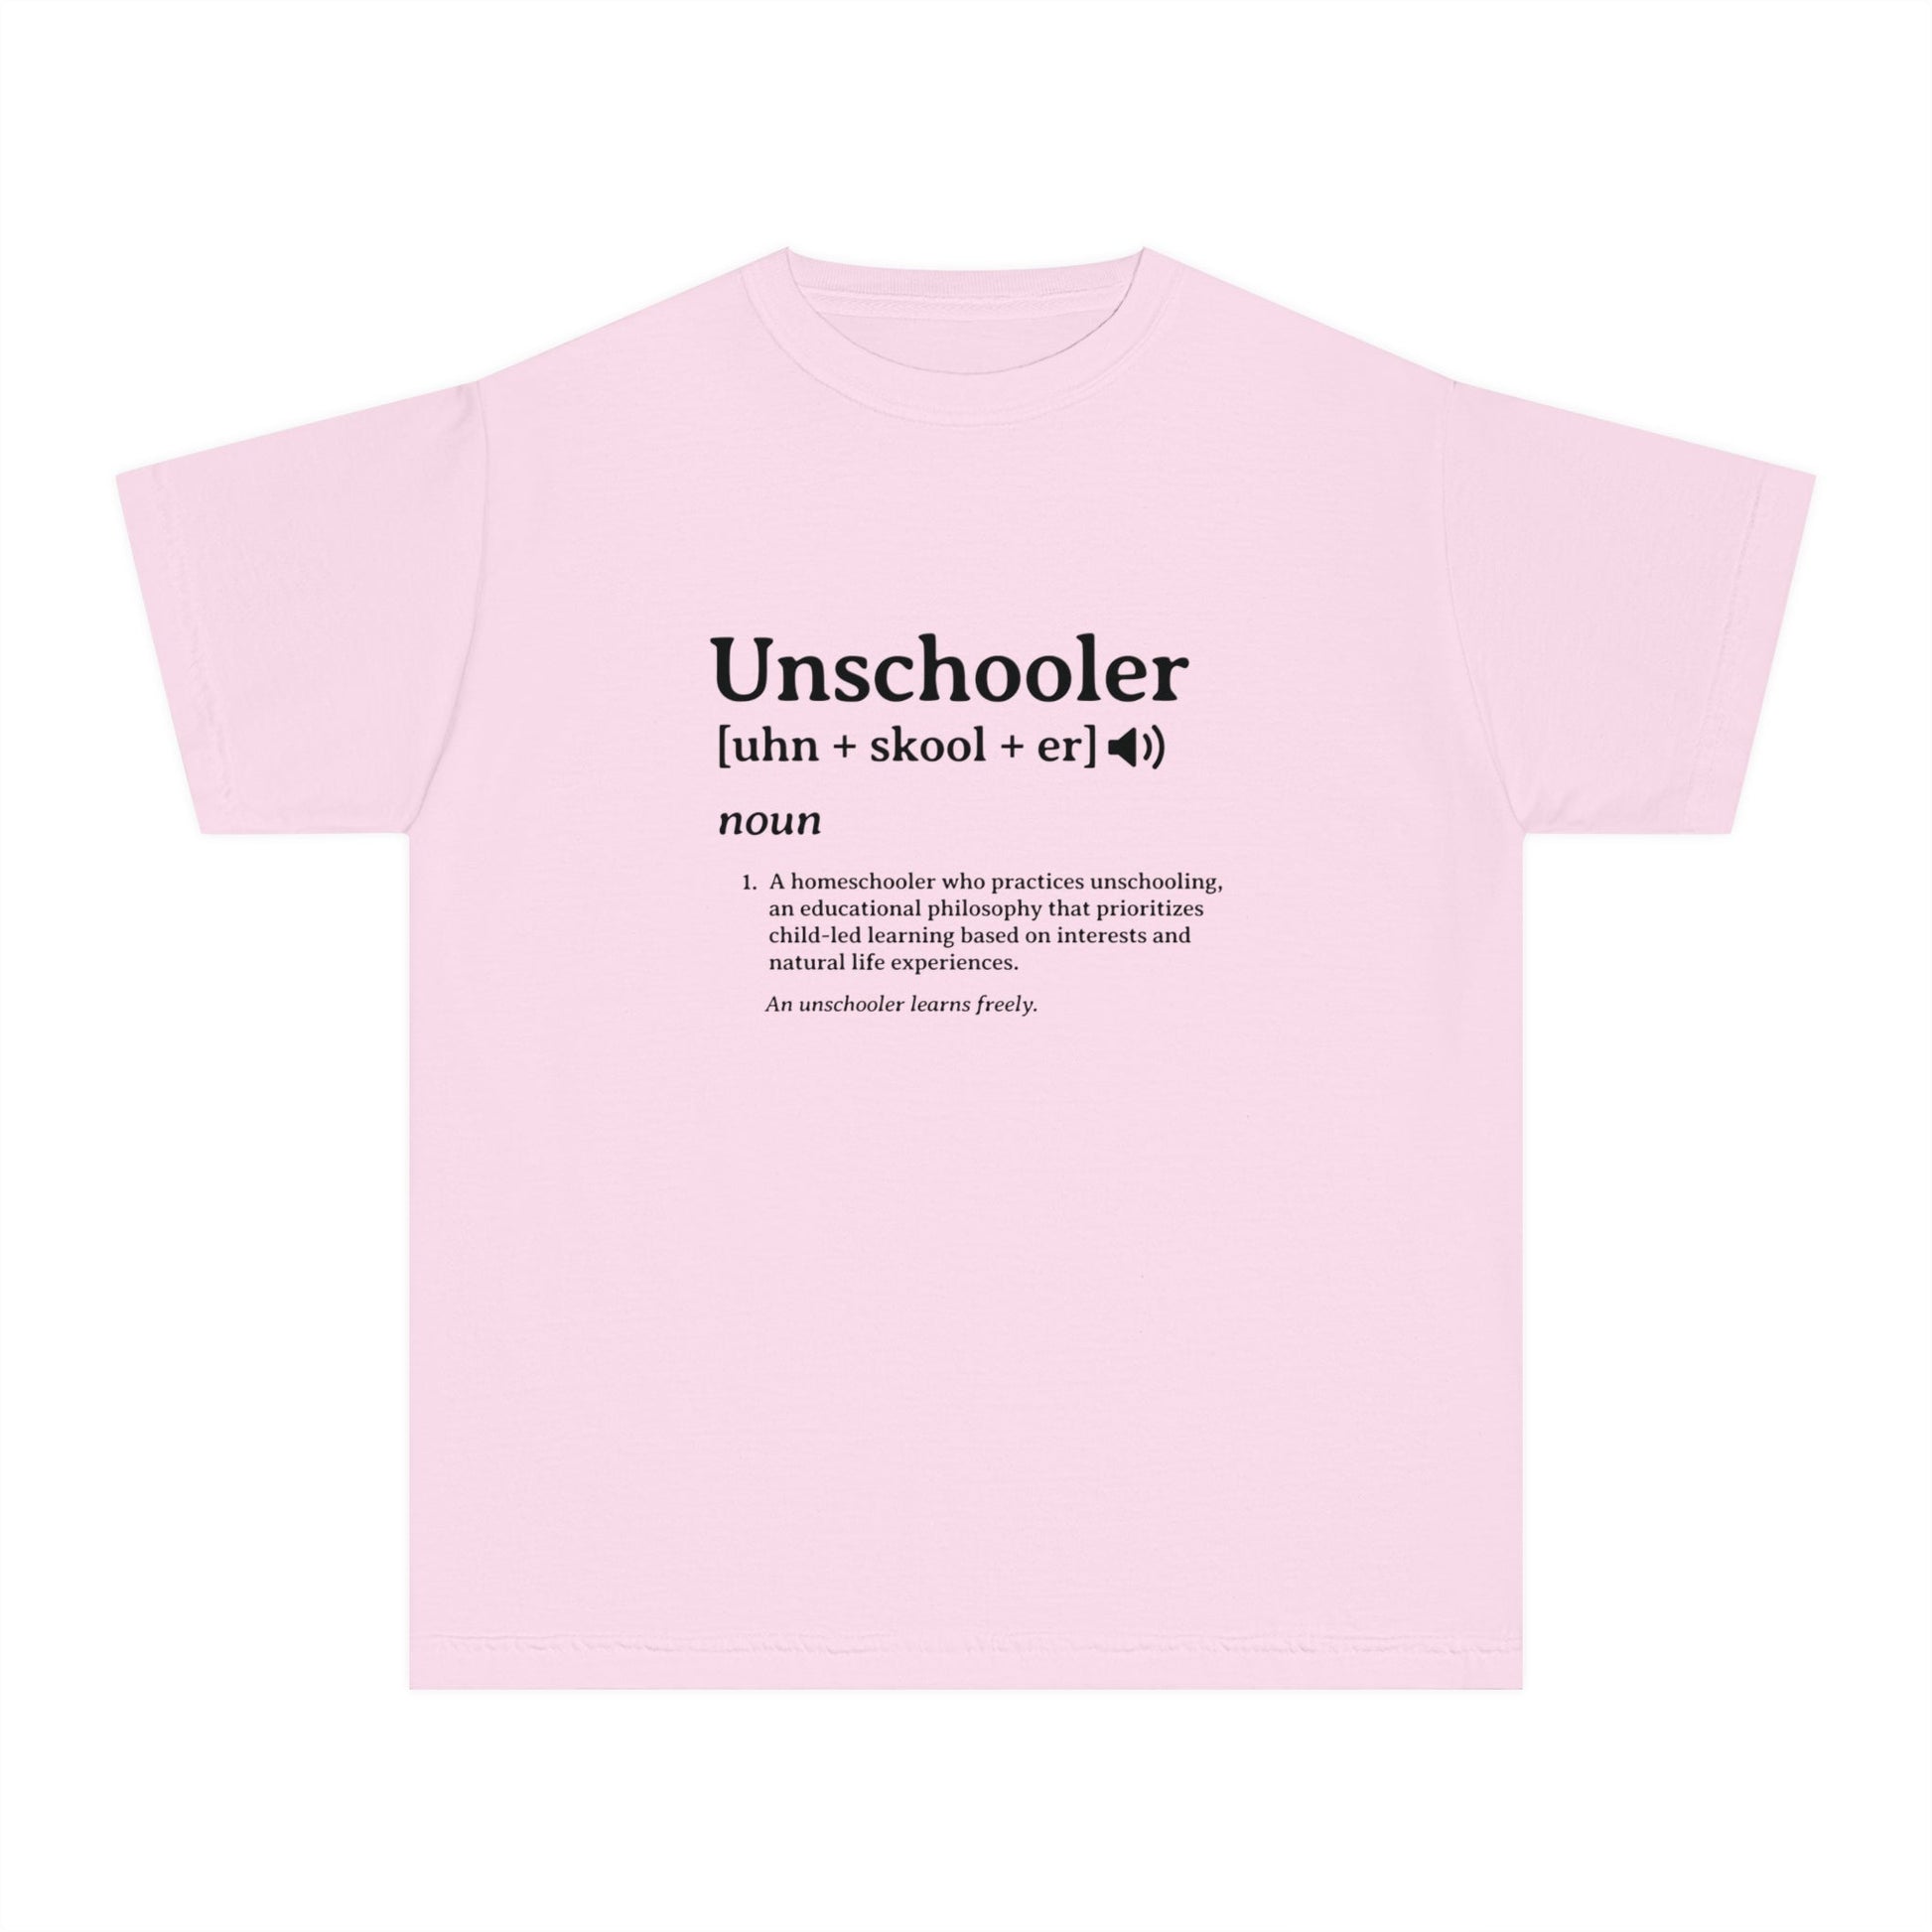 Unschooler Definition Youth Shirt for Homeschool kids